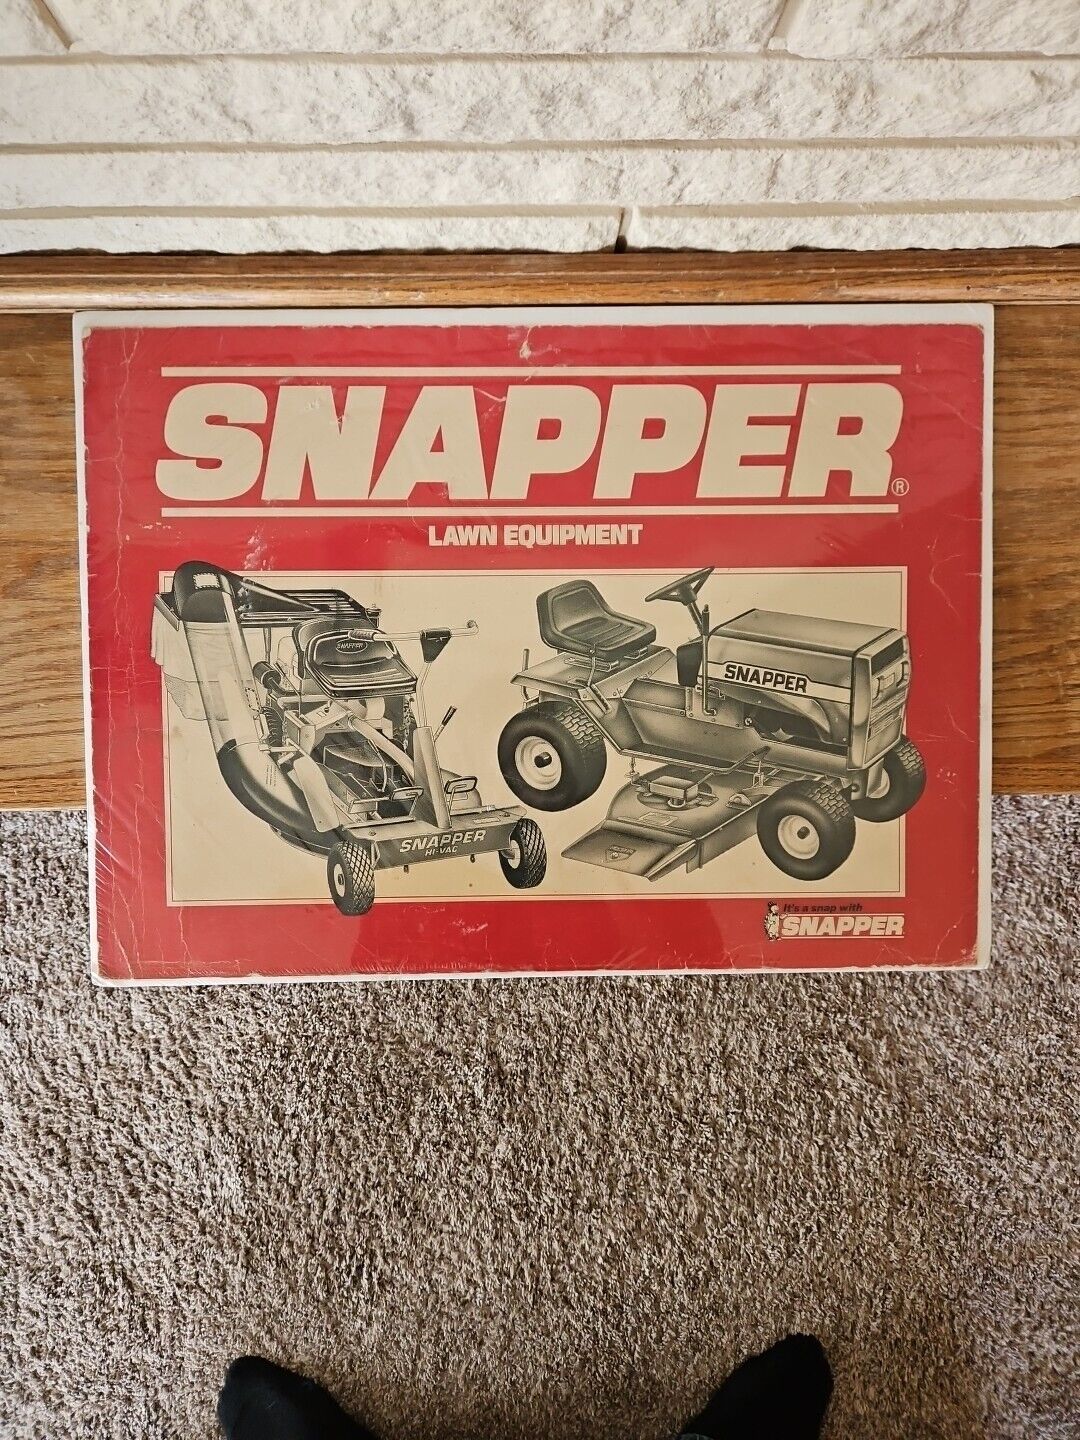 Vintage Snapper Lawn Equipment Poster, Original Advertising